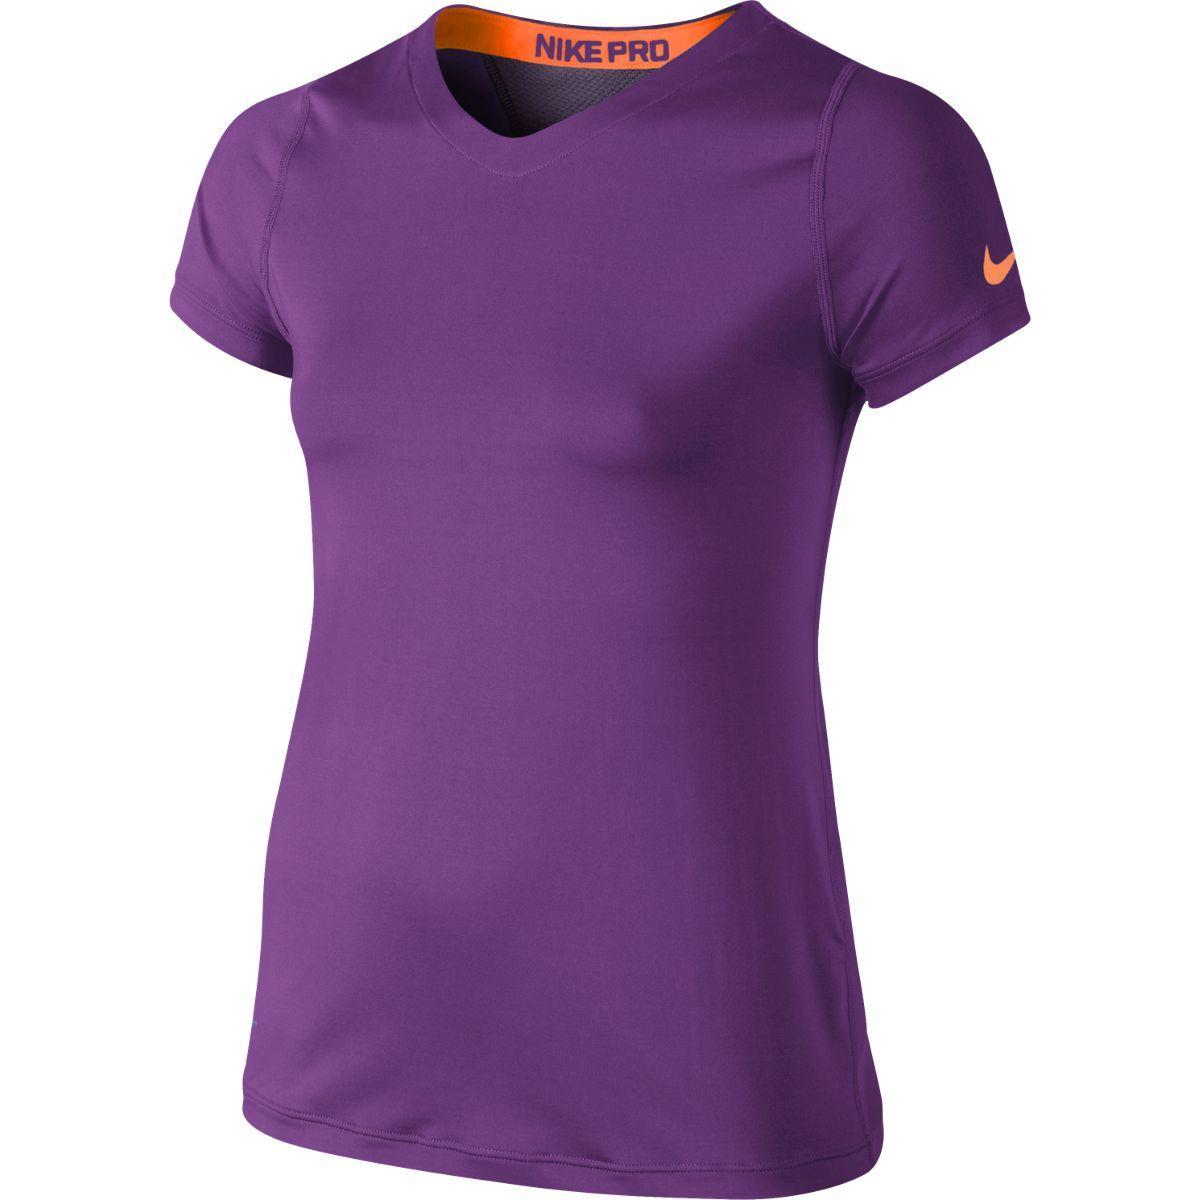 Nike Girls Pro Fitted Short Sleeve Top - Purple/Orange - Tennisnuts.com